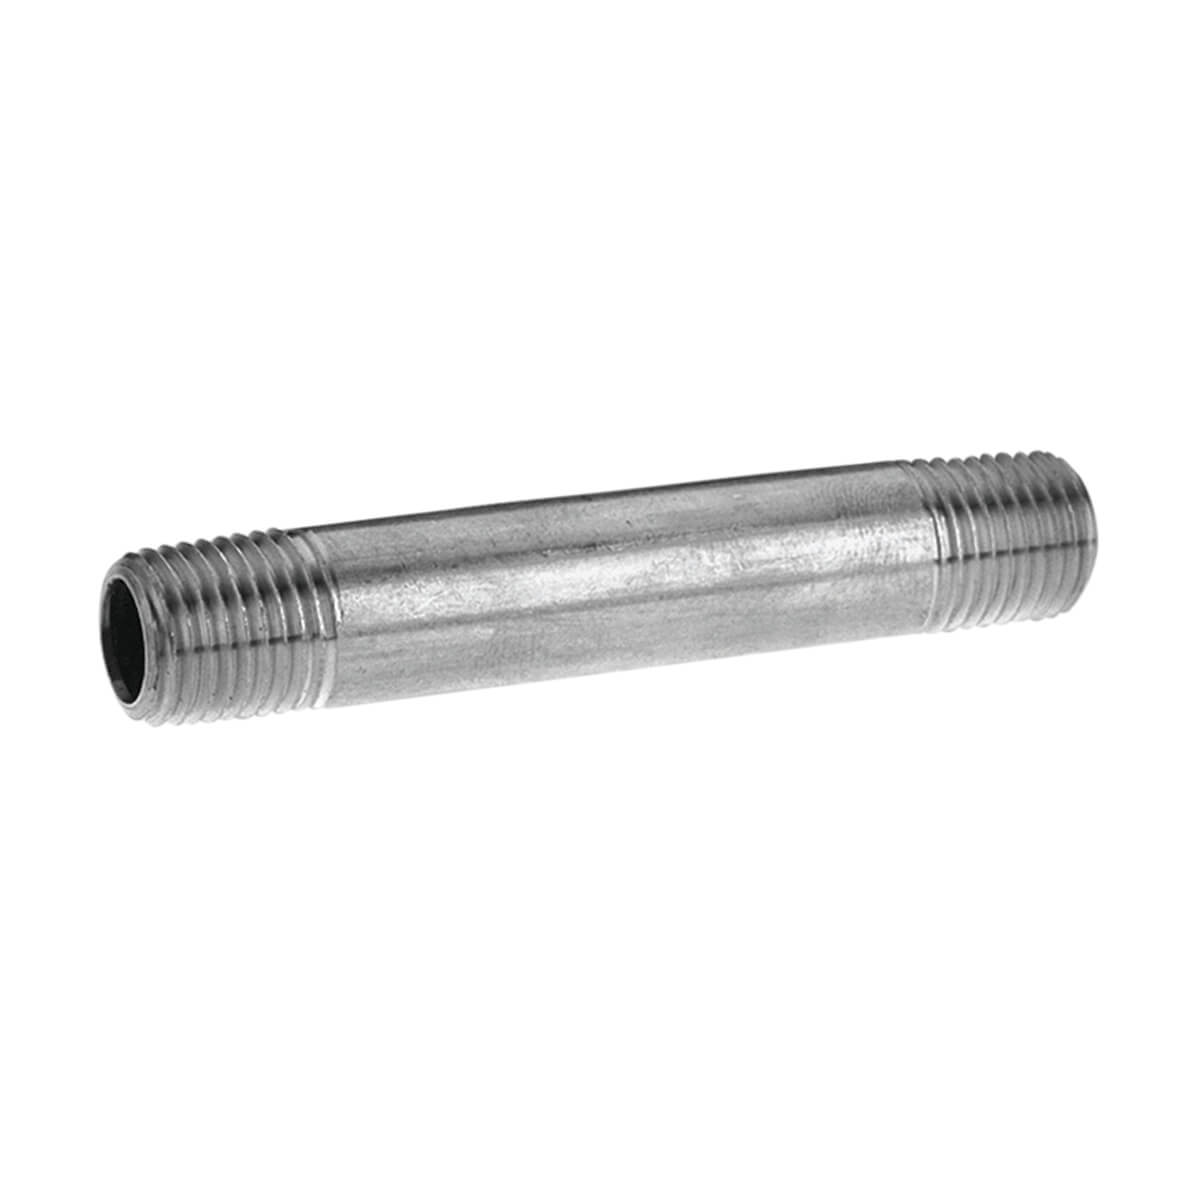 Pipe Nipple Galvanized Steel - 1-1/2-in x 3-1/2-in